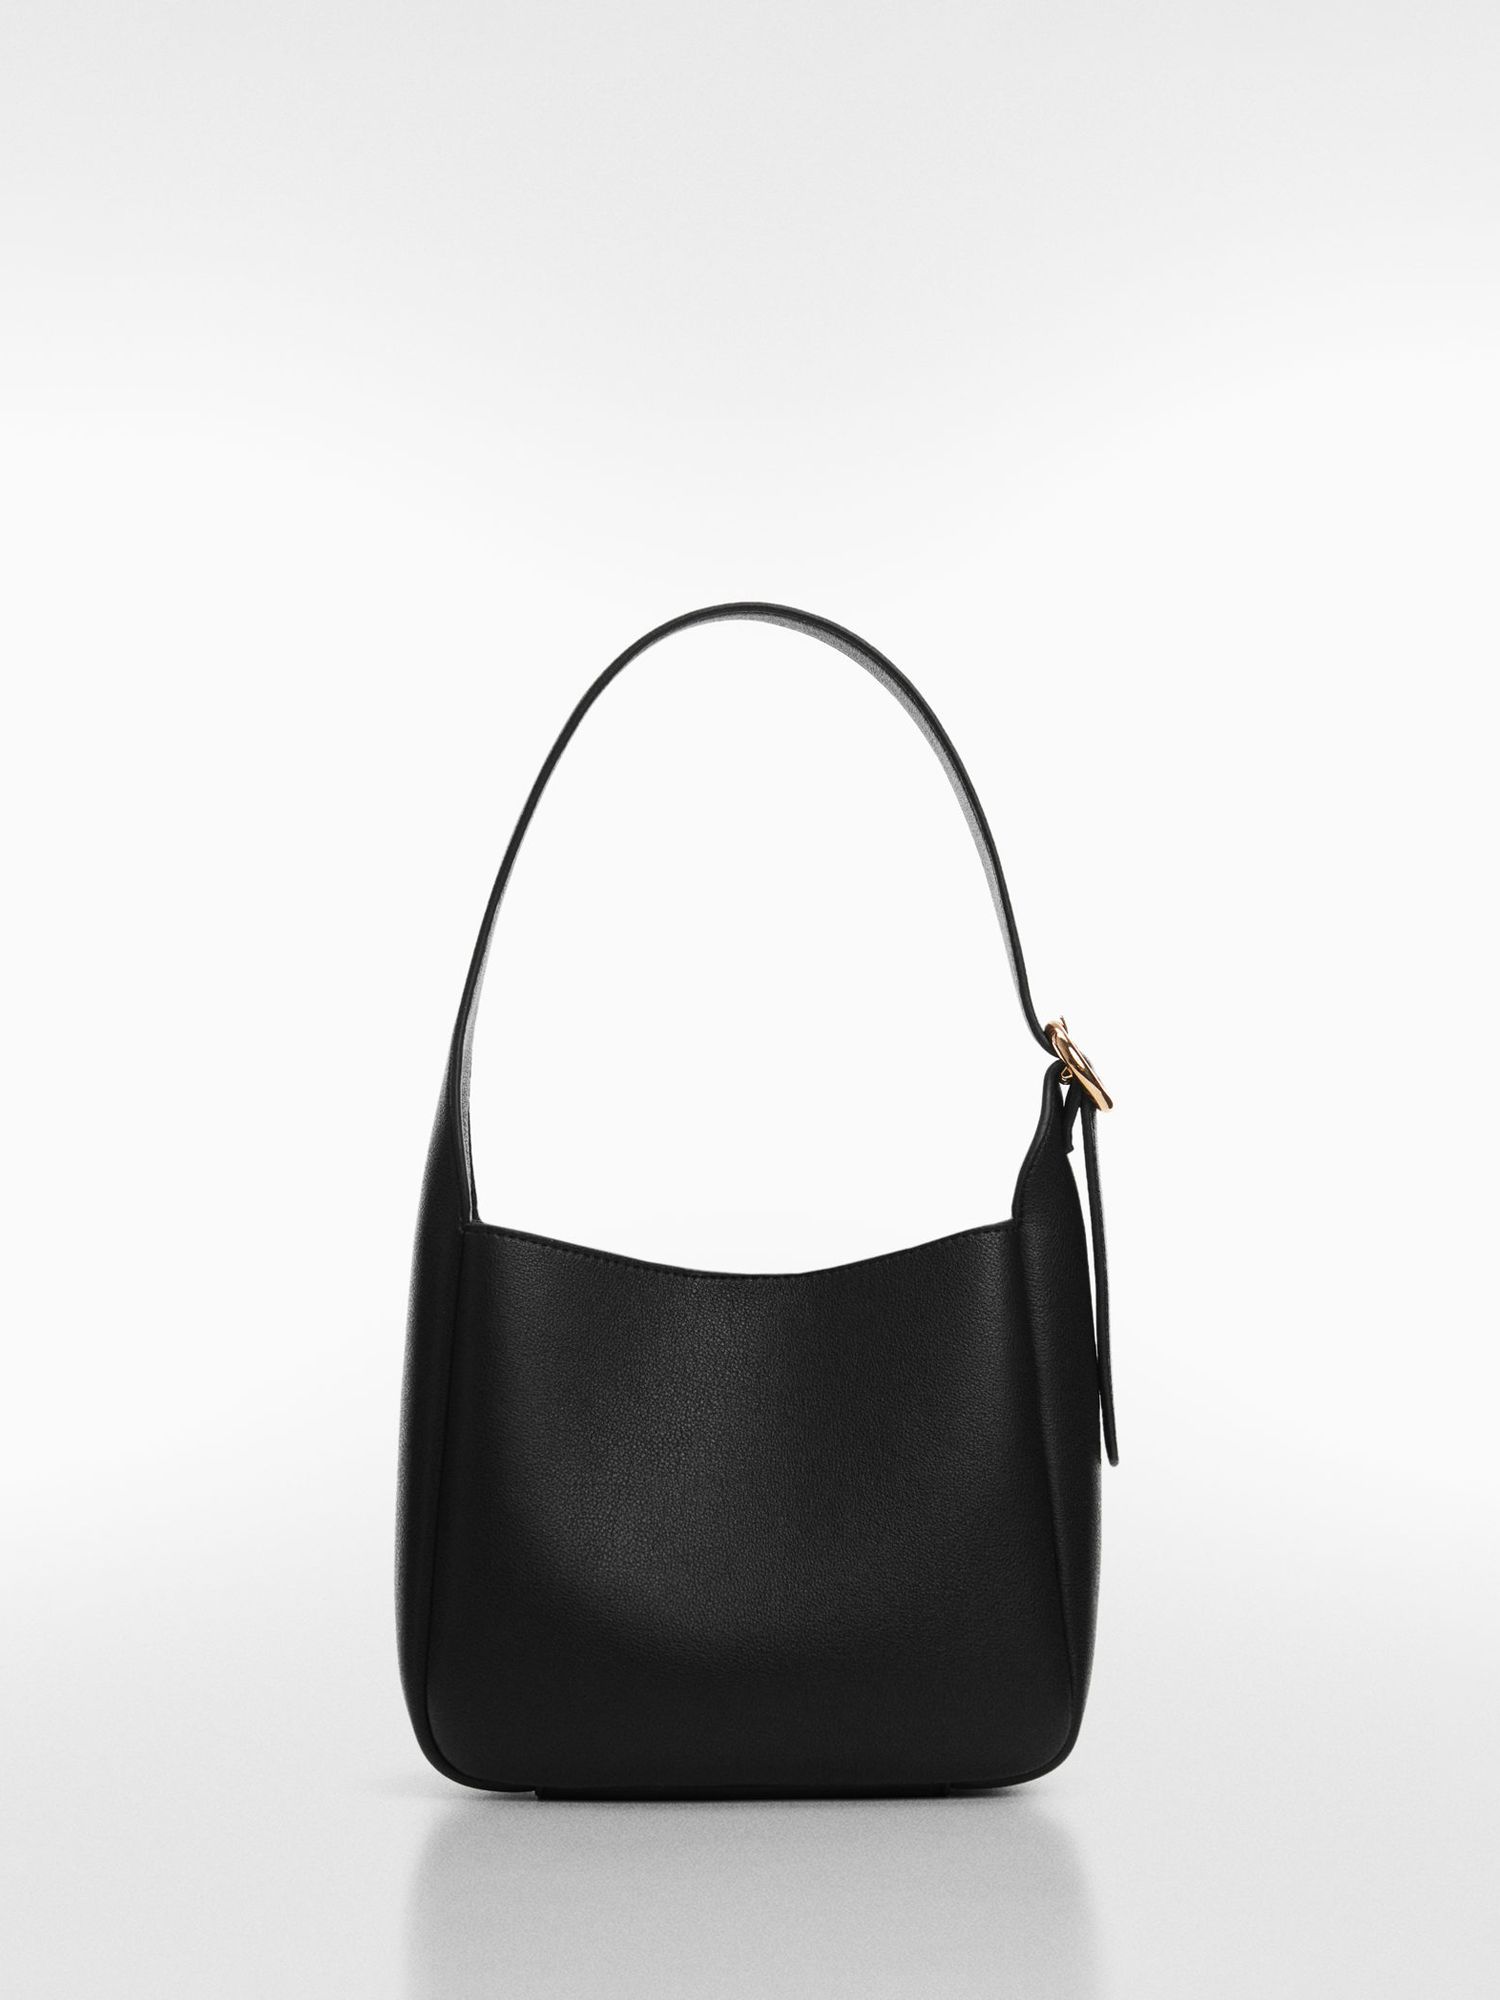 Mango Salva Faux Leather Shoulder Bag, Black, One Size